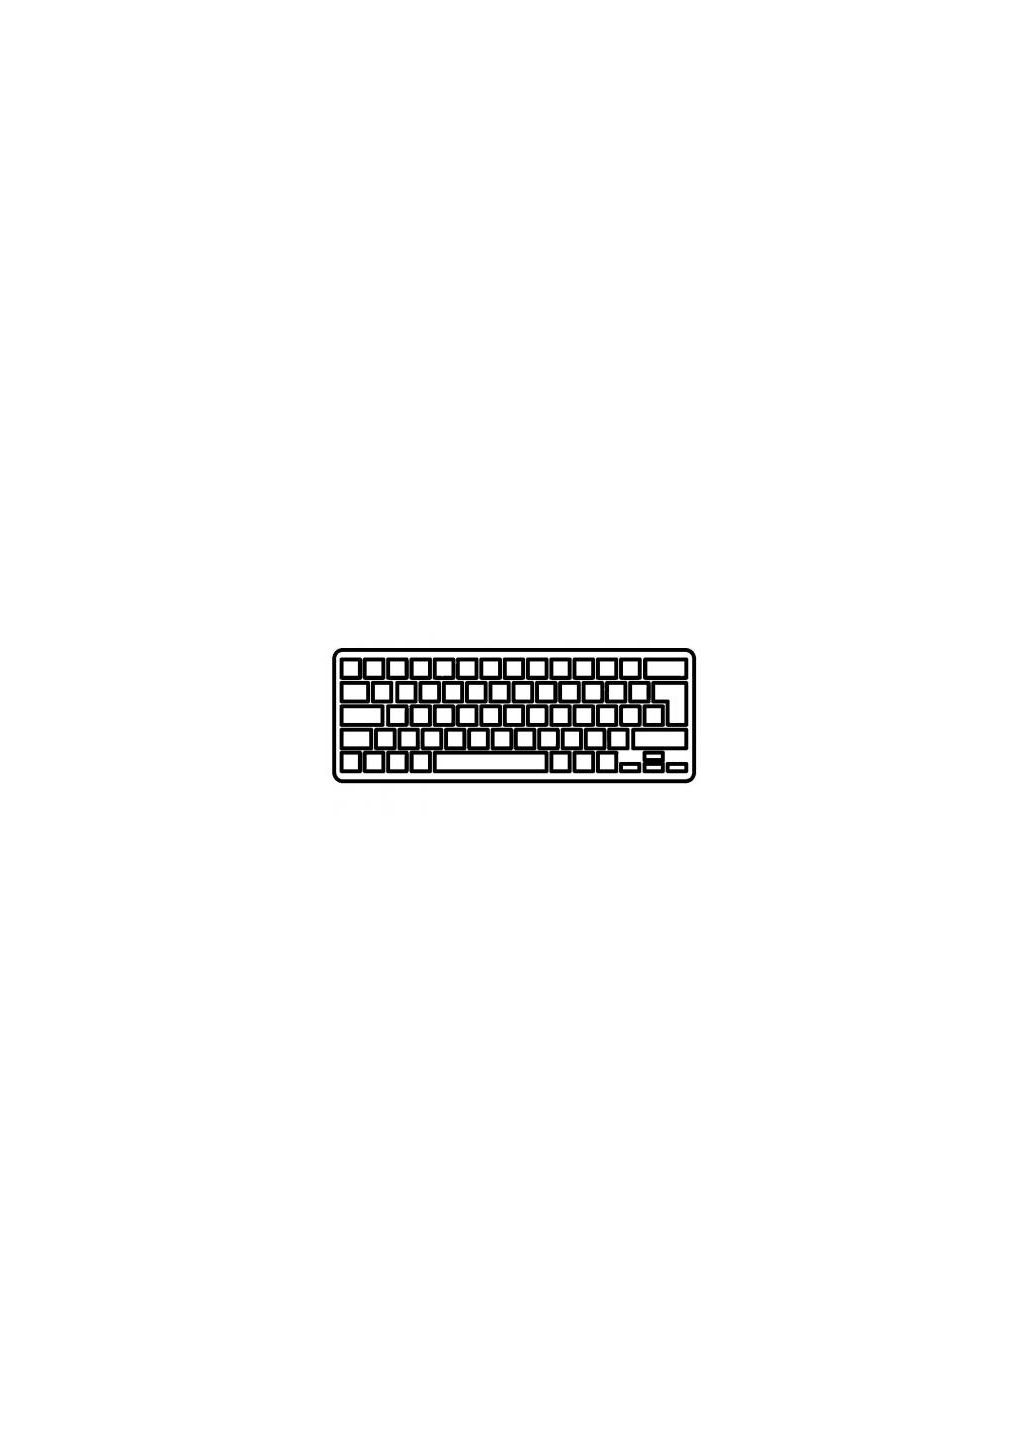 Клавиатура ноутбука Pro 15.4 A1286 (20092012) black,wo/frame,backlight UA/US (A46009) Apple pro 15.4 a1286 (2009-2012) black, wo/frame, backligh (276706512)